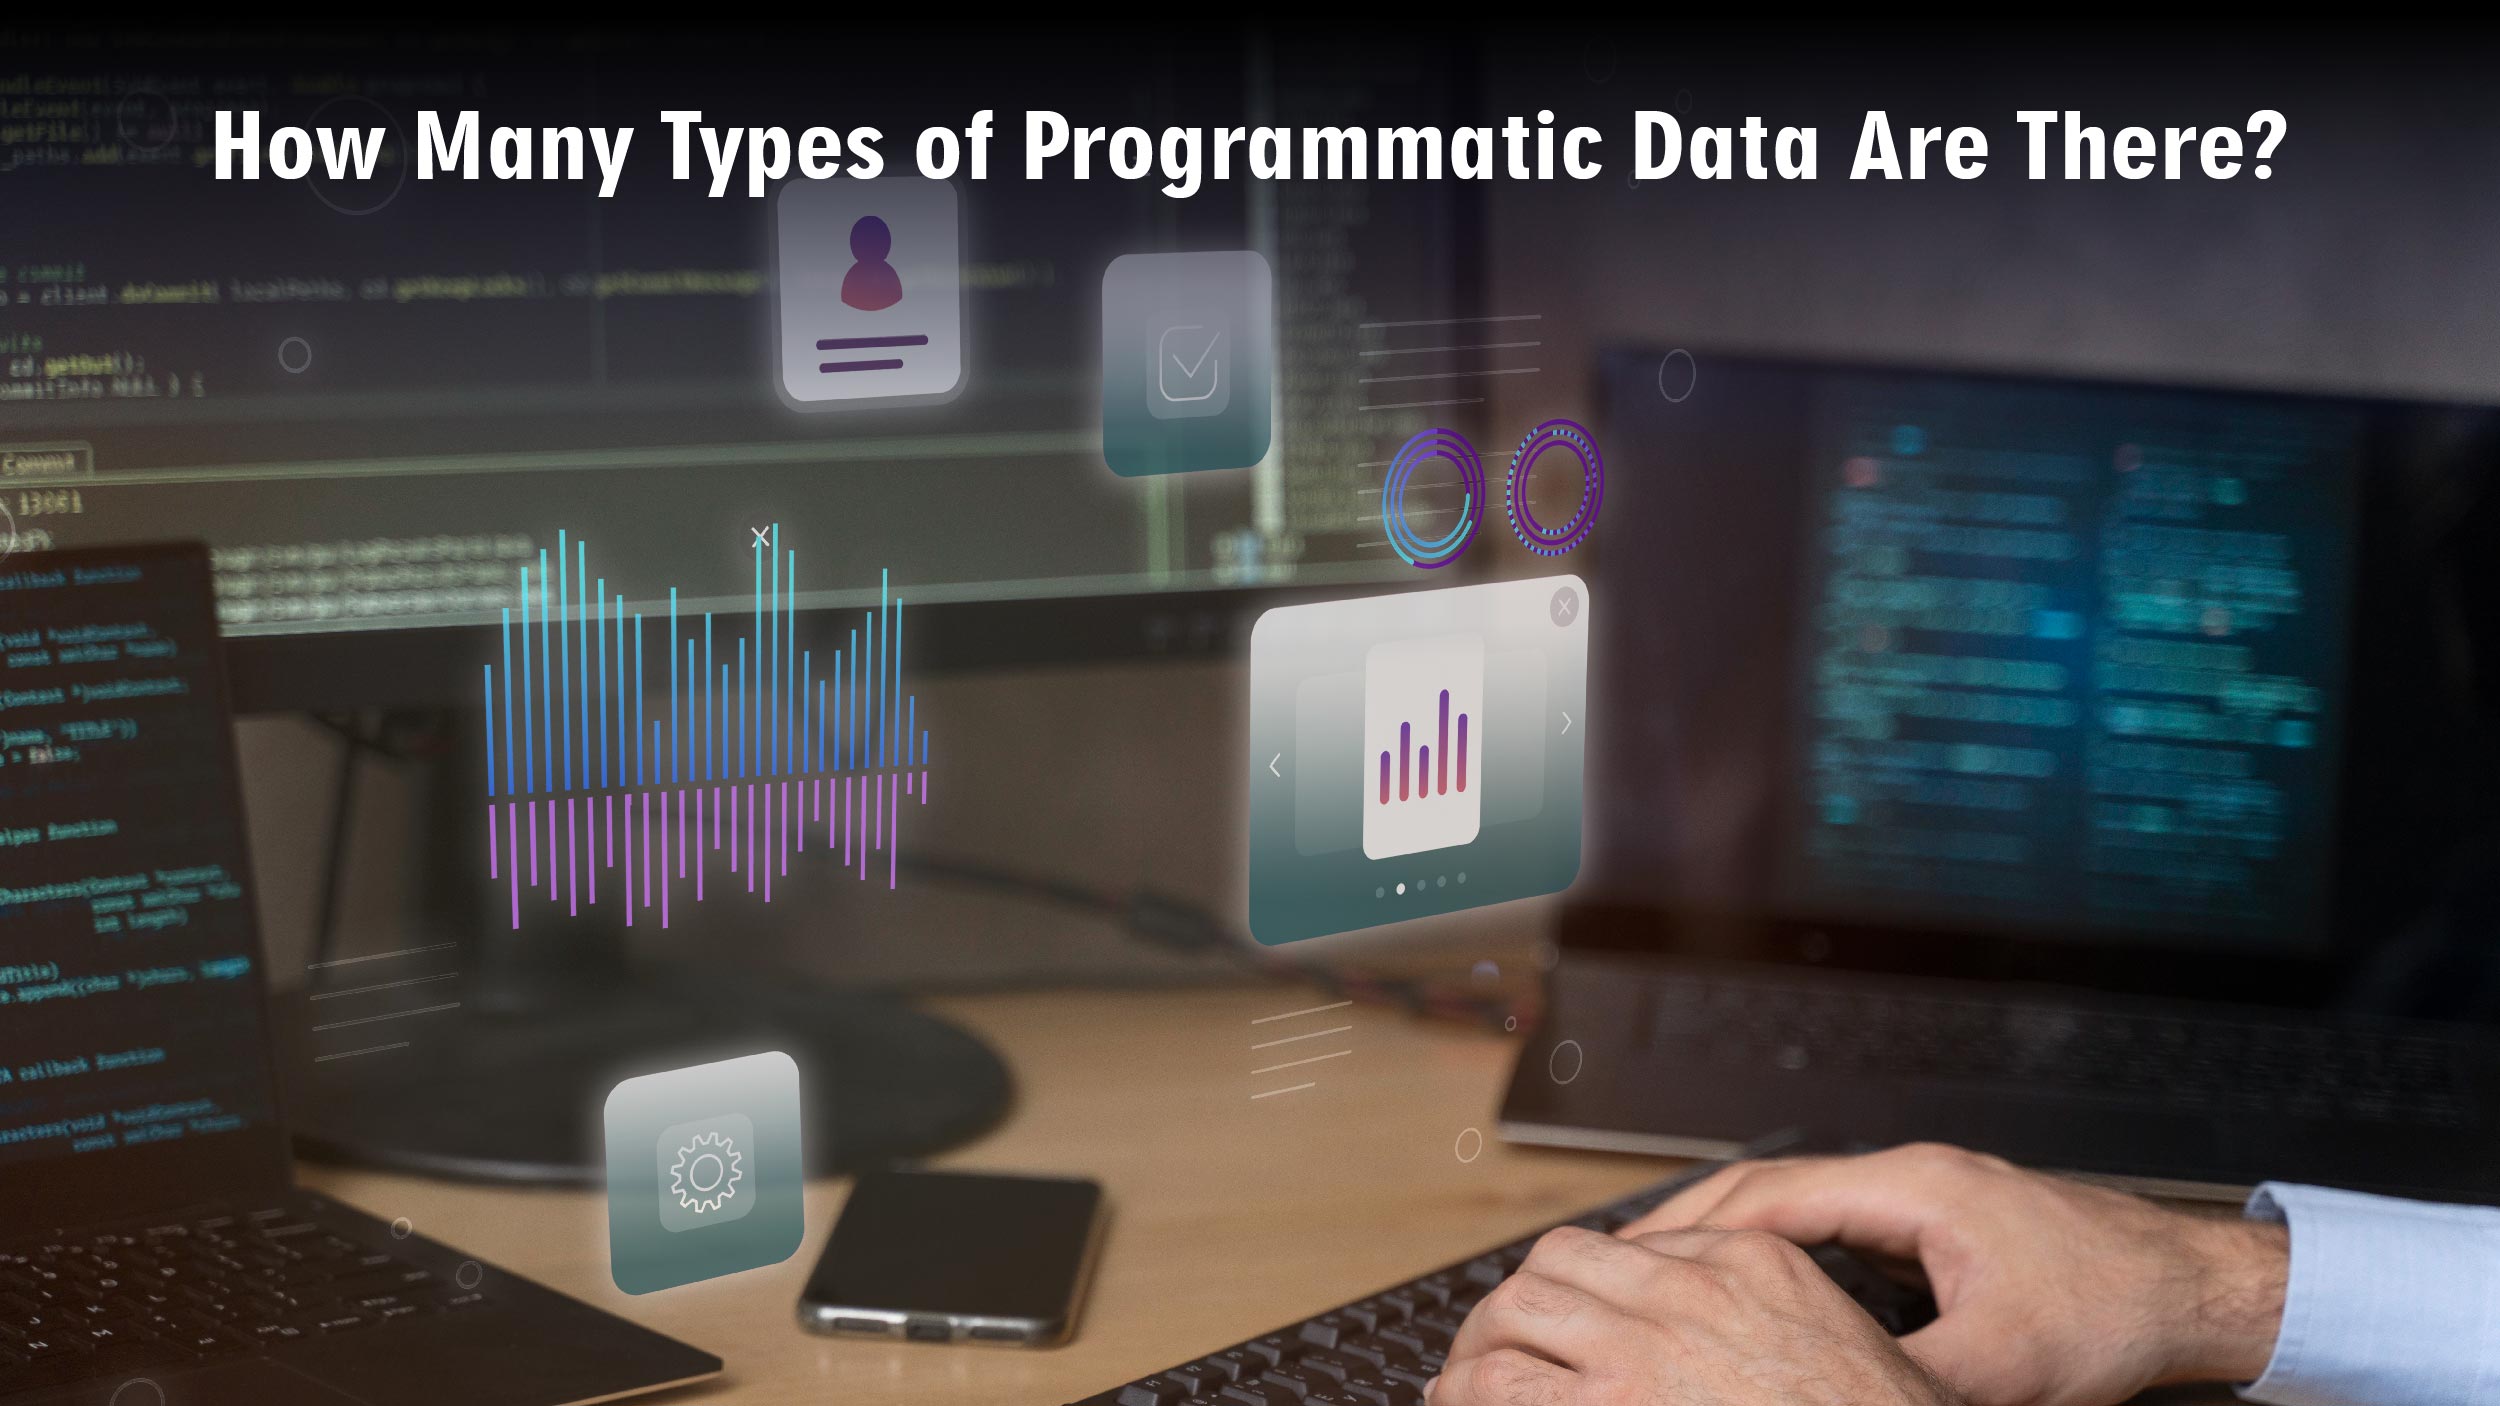 Programmatic data